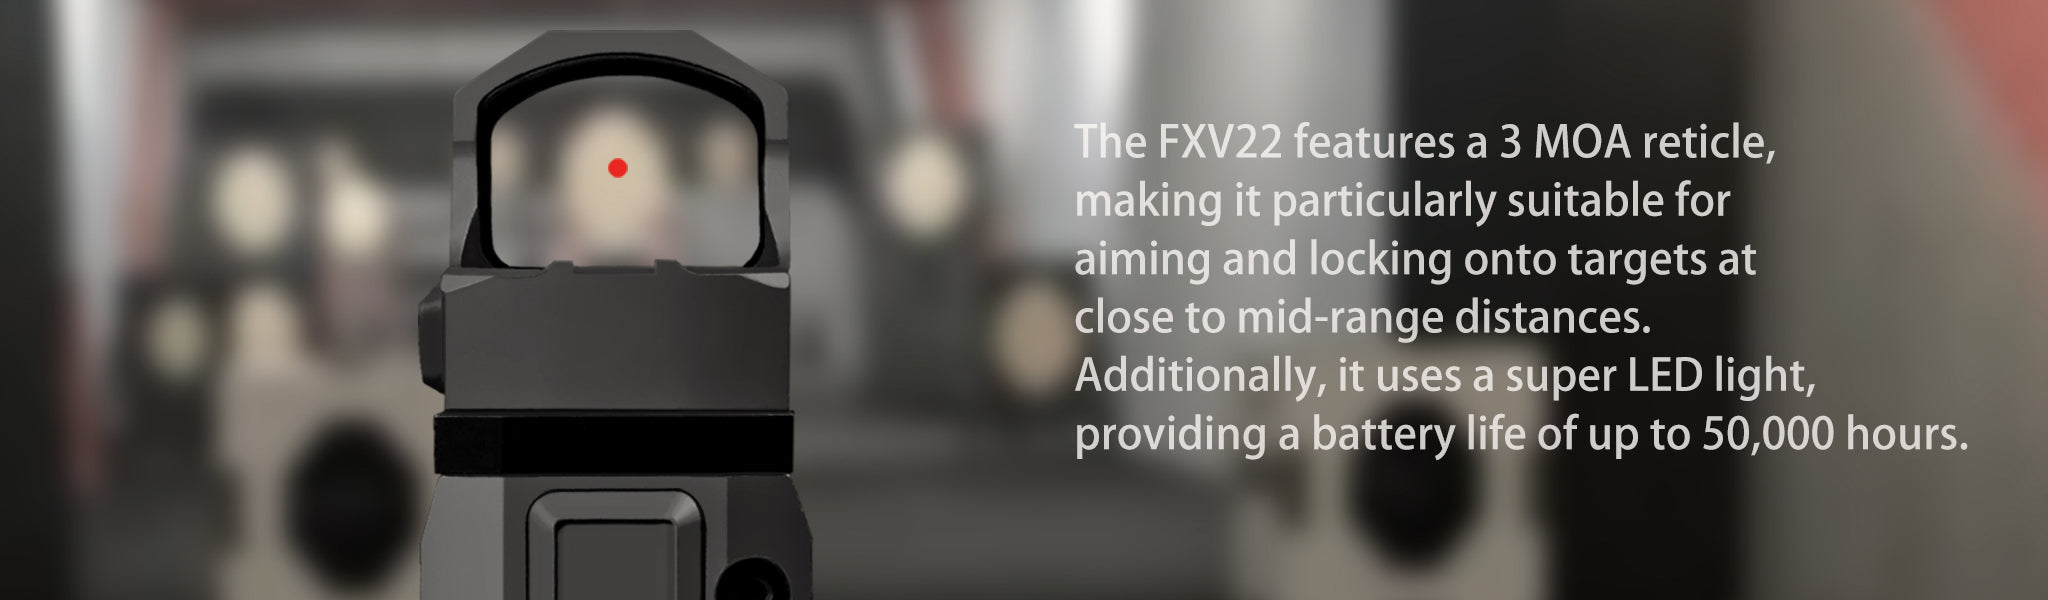 FXV22 具有 3 MOA 十字线，使其特别适合瞄准和锁定中距离附近的目标。 此外，它还采用超级LED灯，电池寿命长达50,000小时。